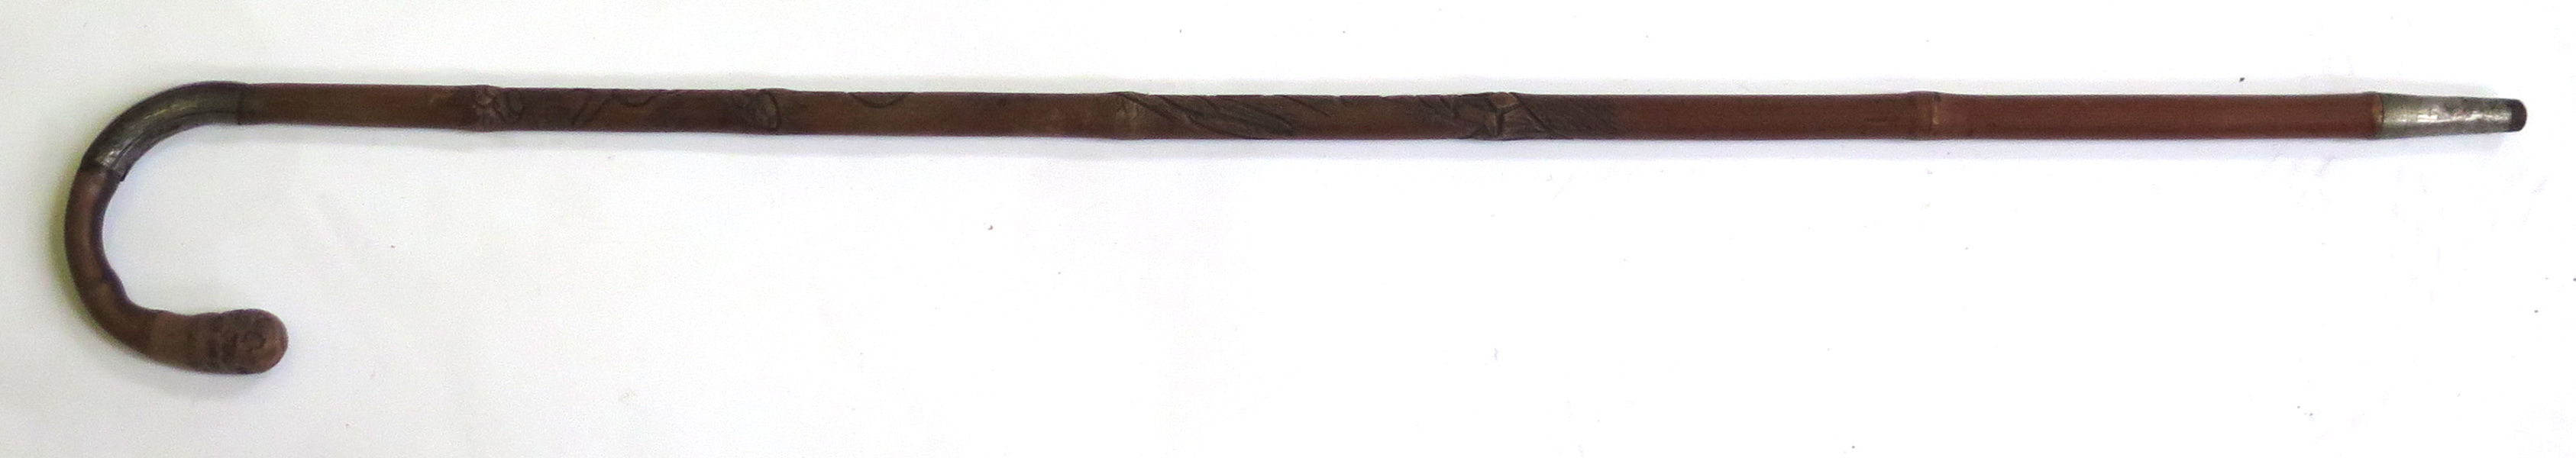 Käpp, bambu med silver(?)montage, antagligen Kina, sekelskiftet 1900,_13001a_lg.jpeg